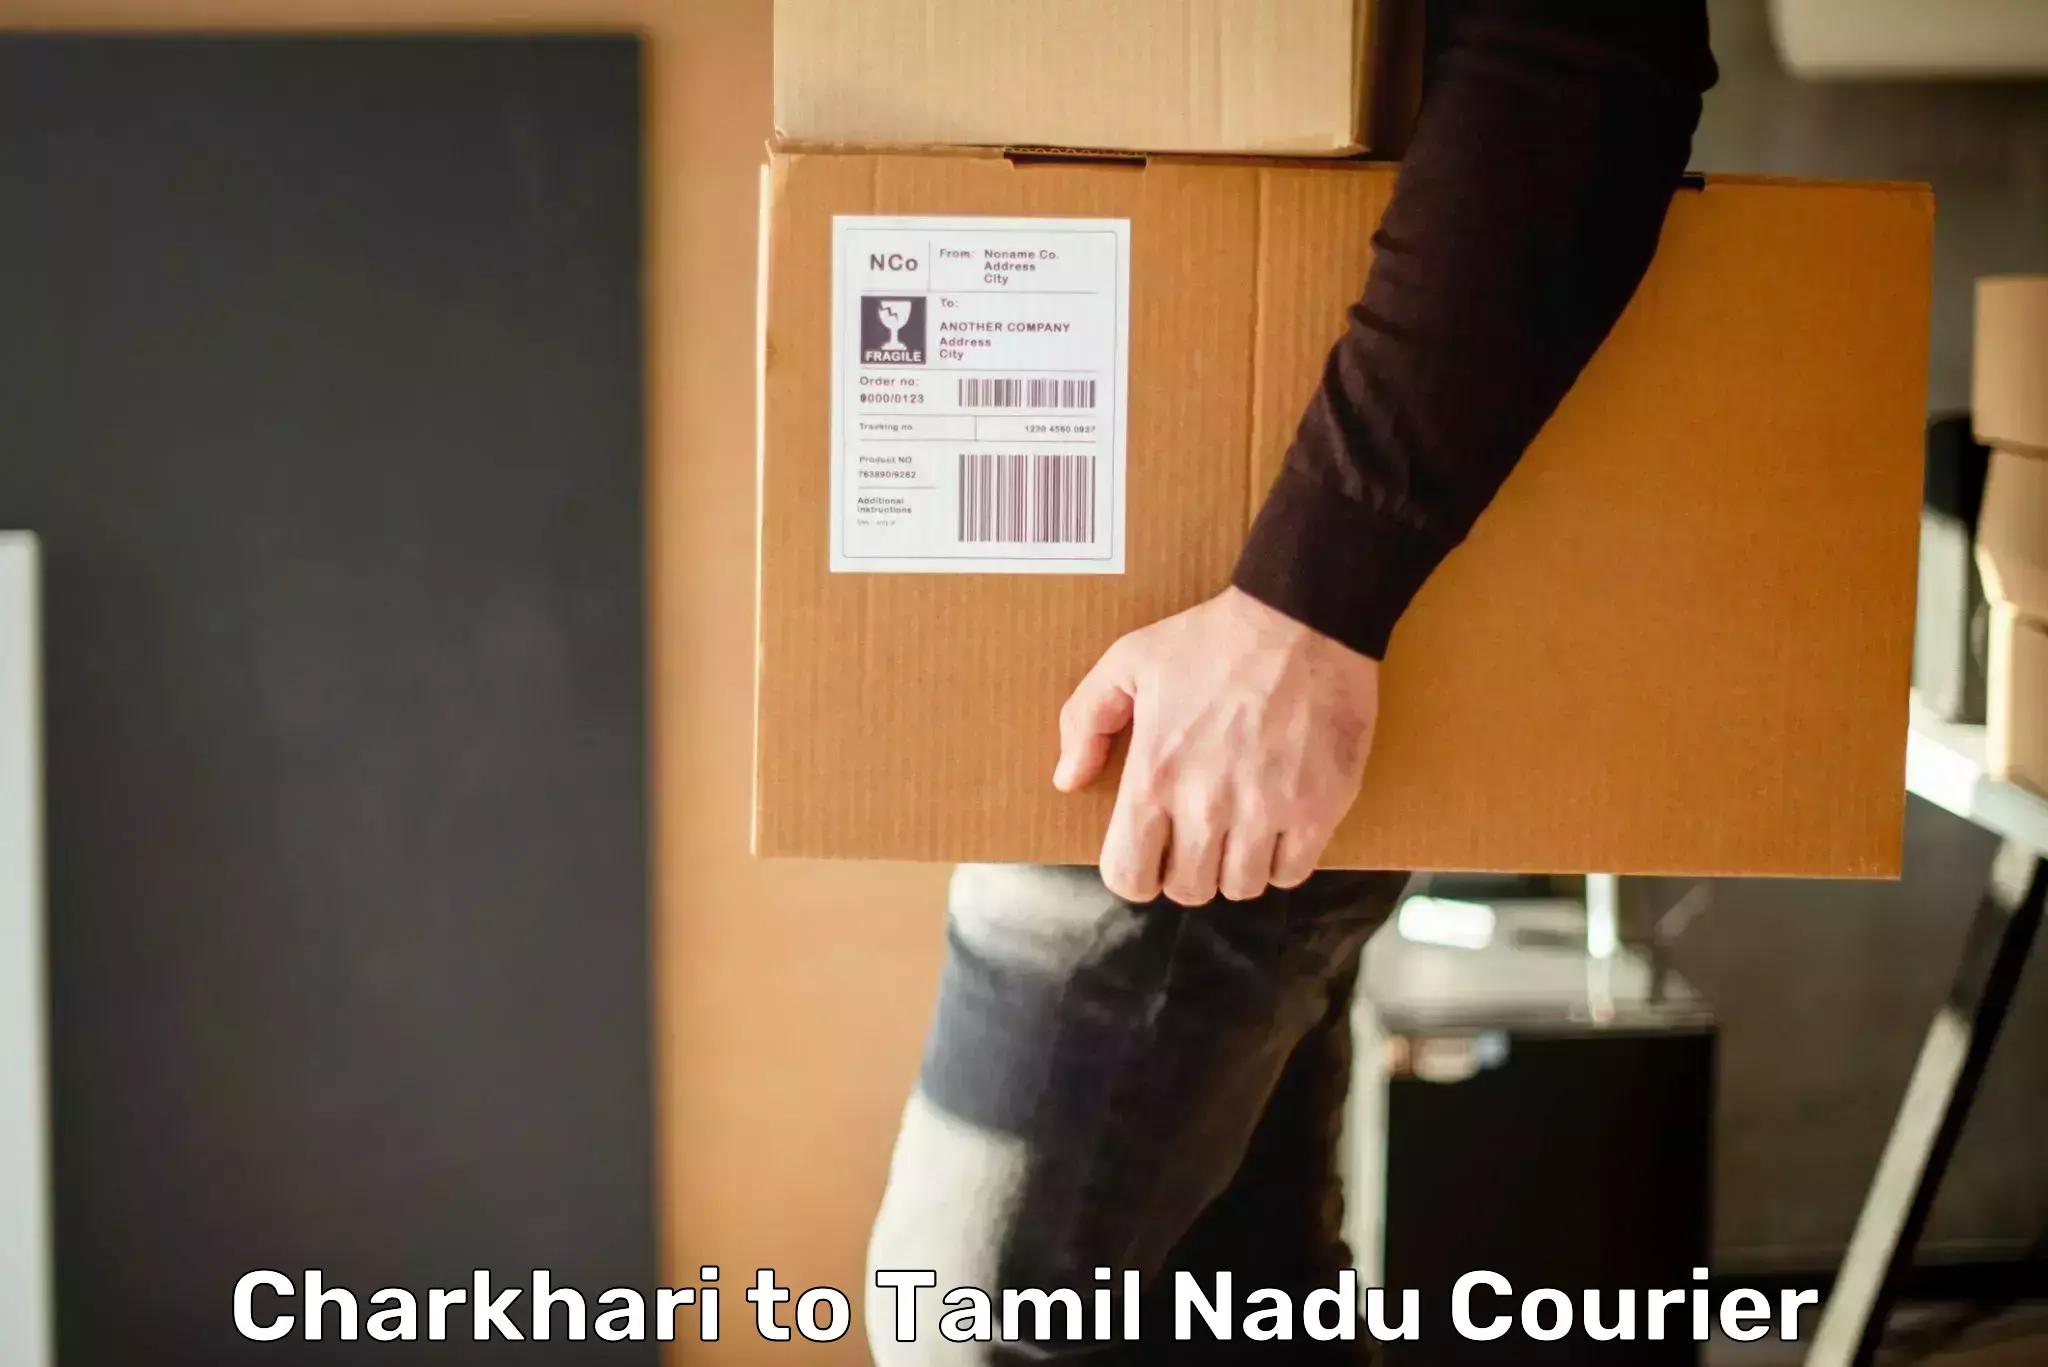 Courier service comparison Charkhari to Karaikudi